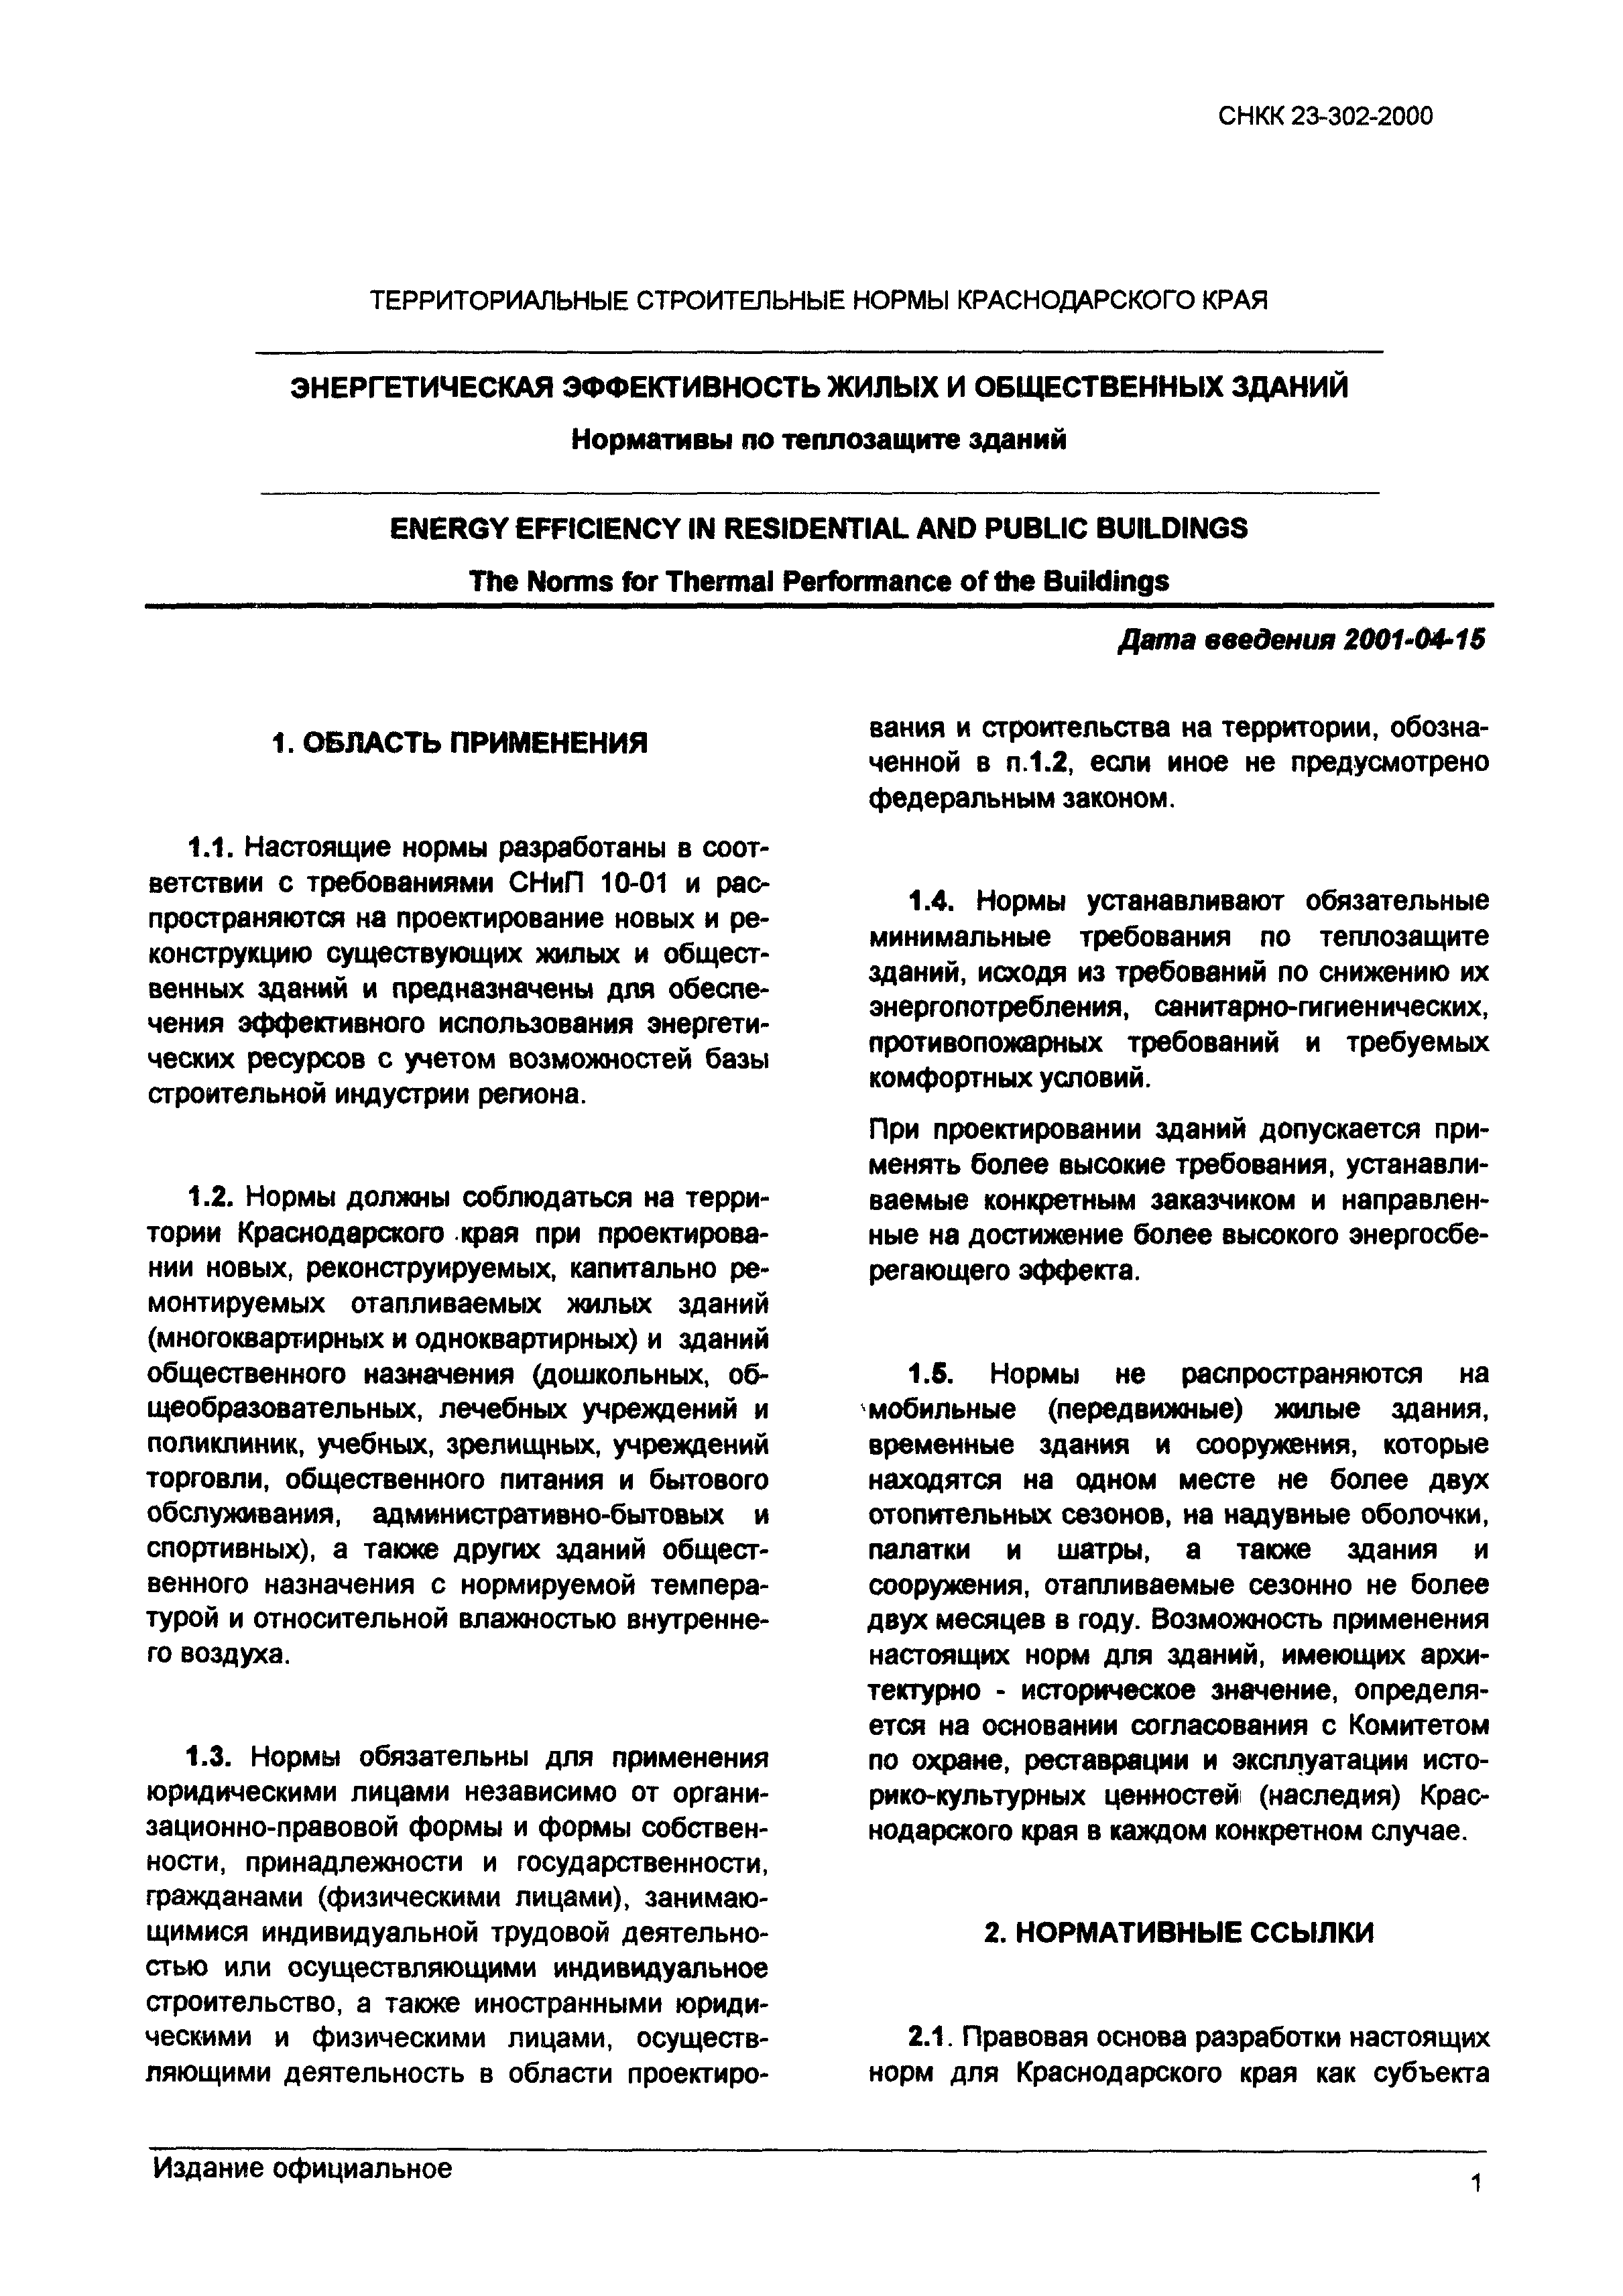 ТСН 23-319-2000 Краснодарского края